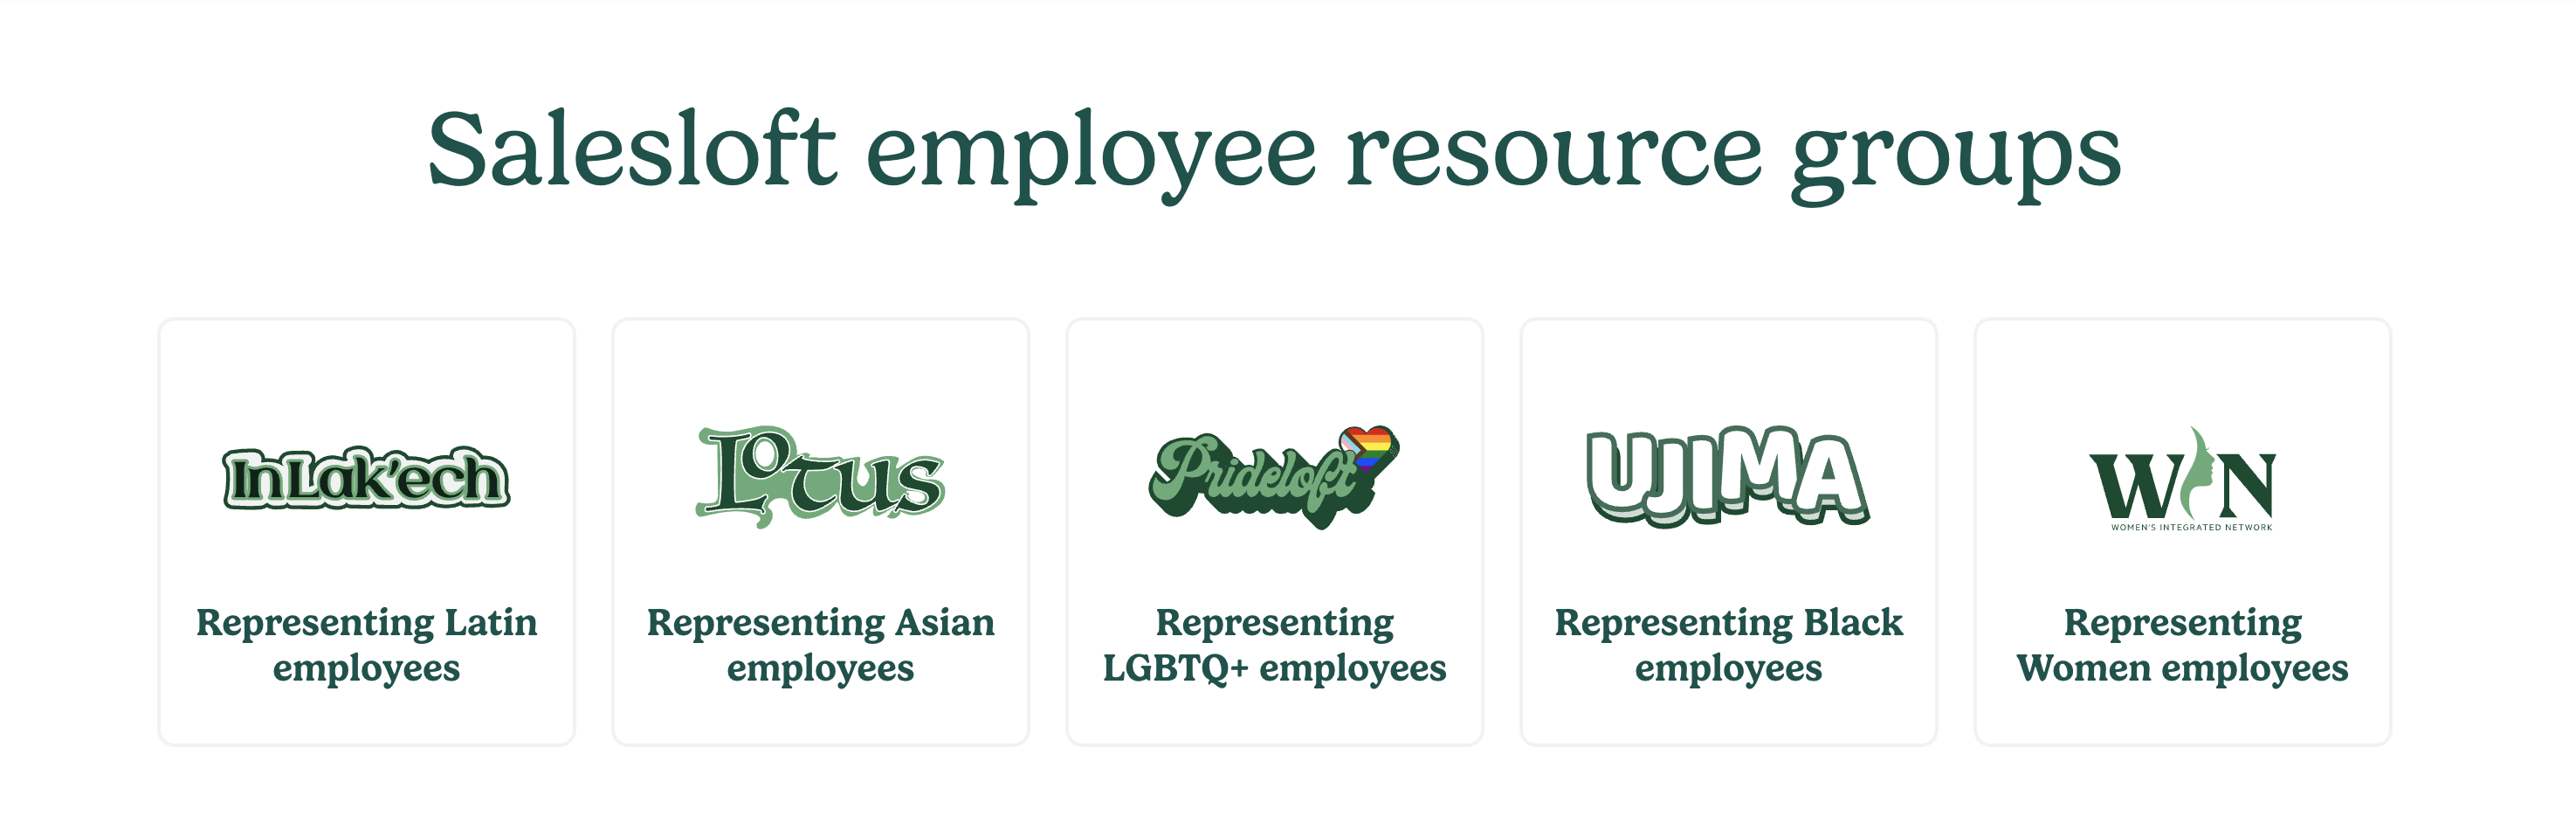 Salesloft has 5 employee resource groups representing Black, Latinx, AAPI, LGBTQ+, and women.